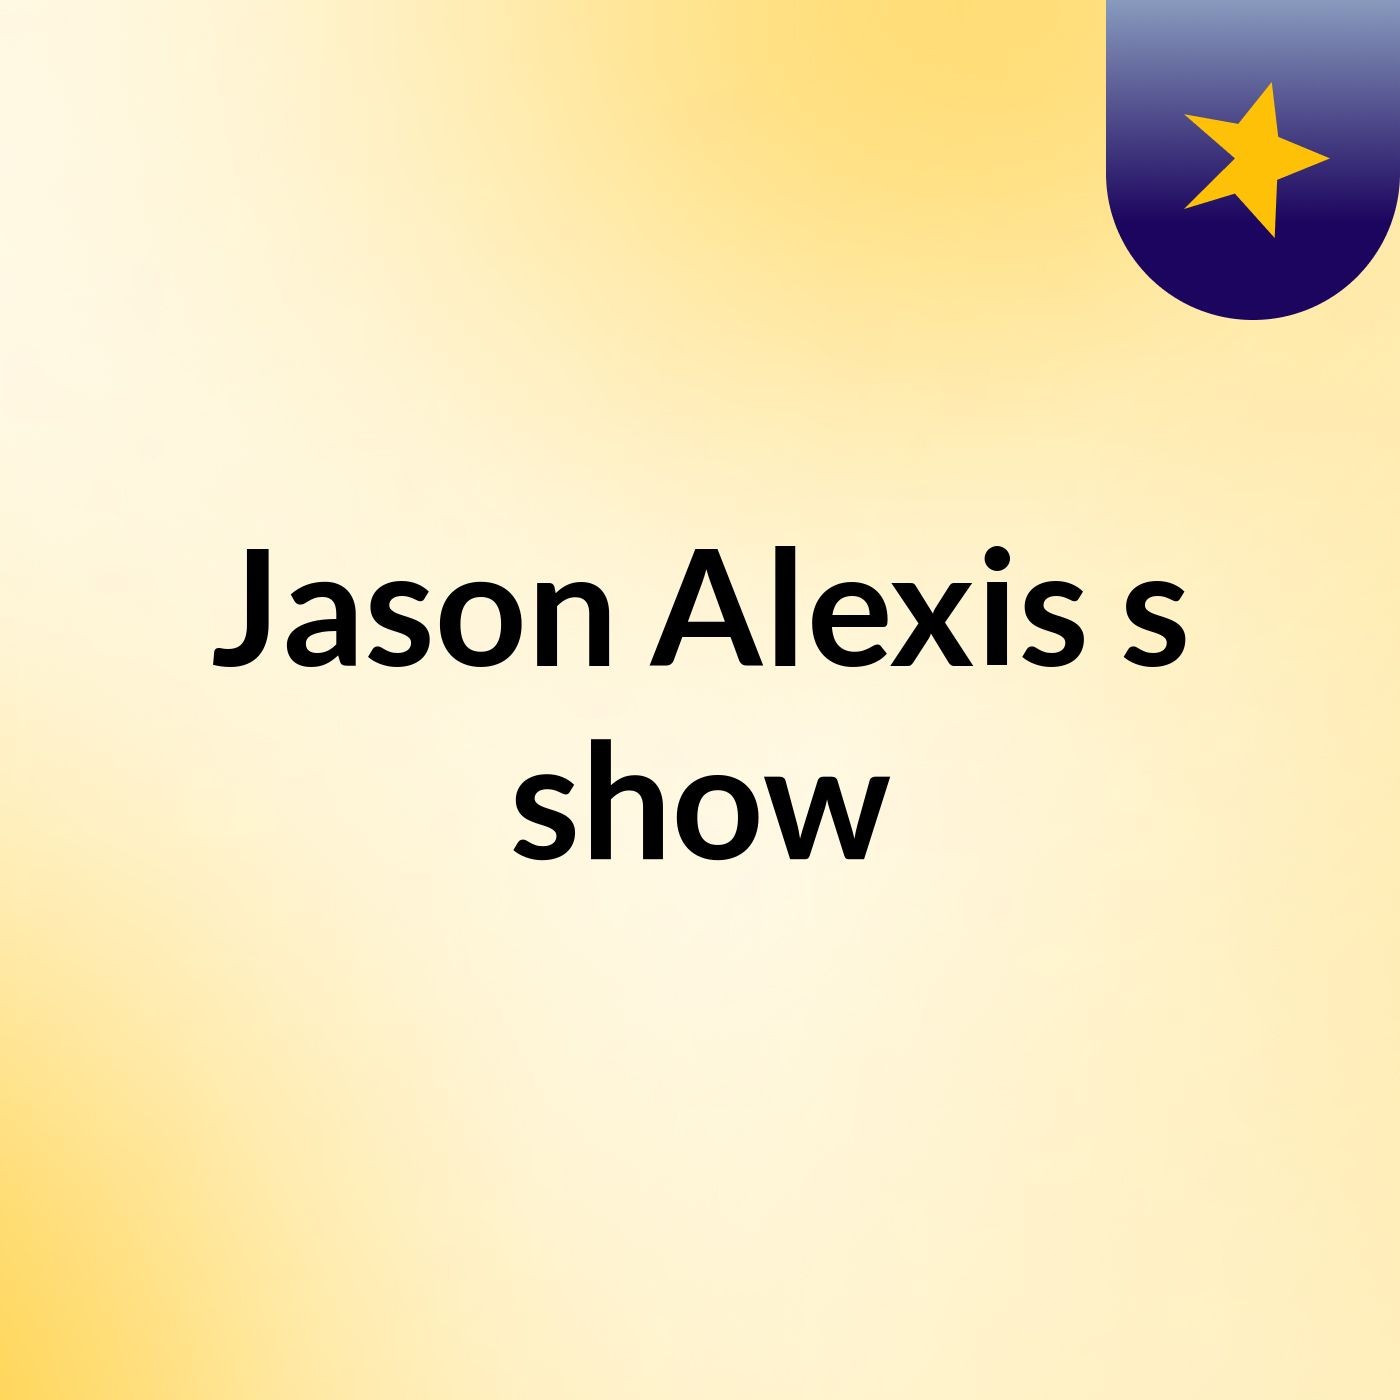 Jason Alexis's show